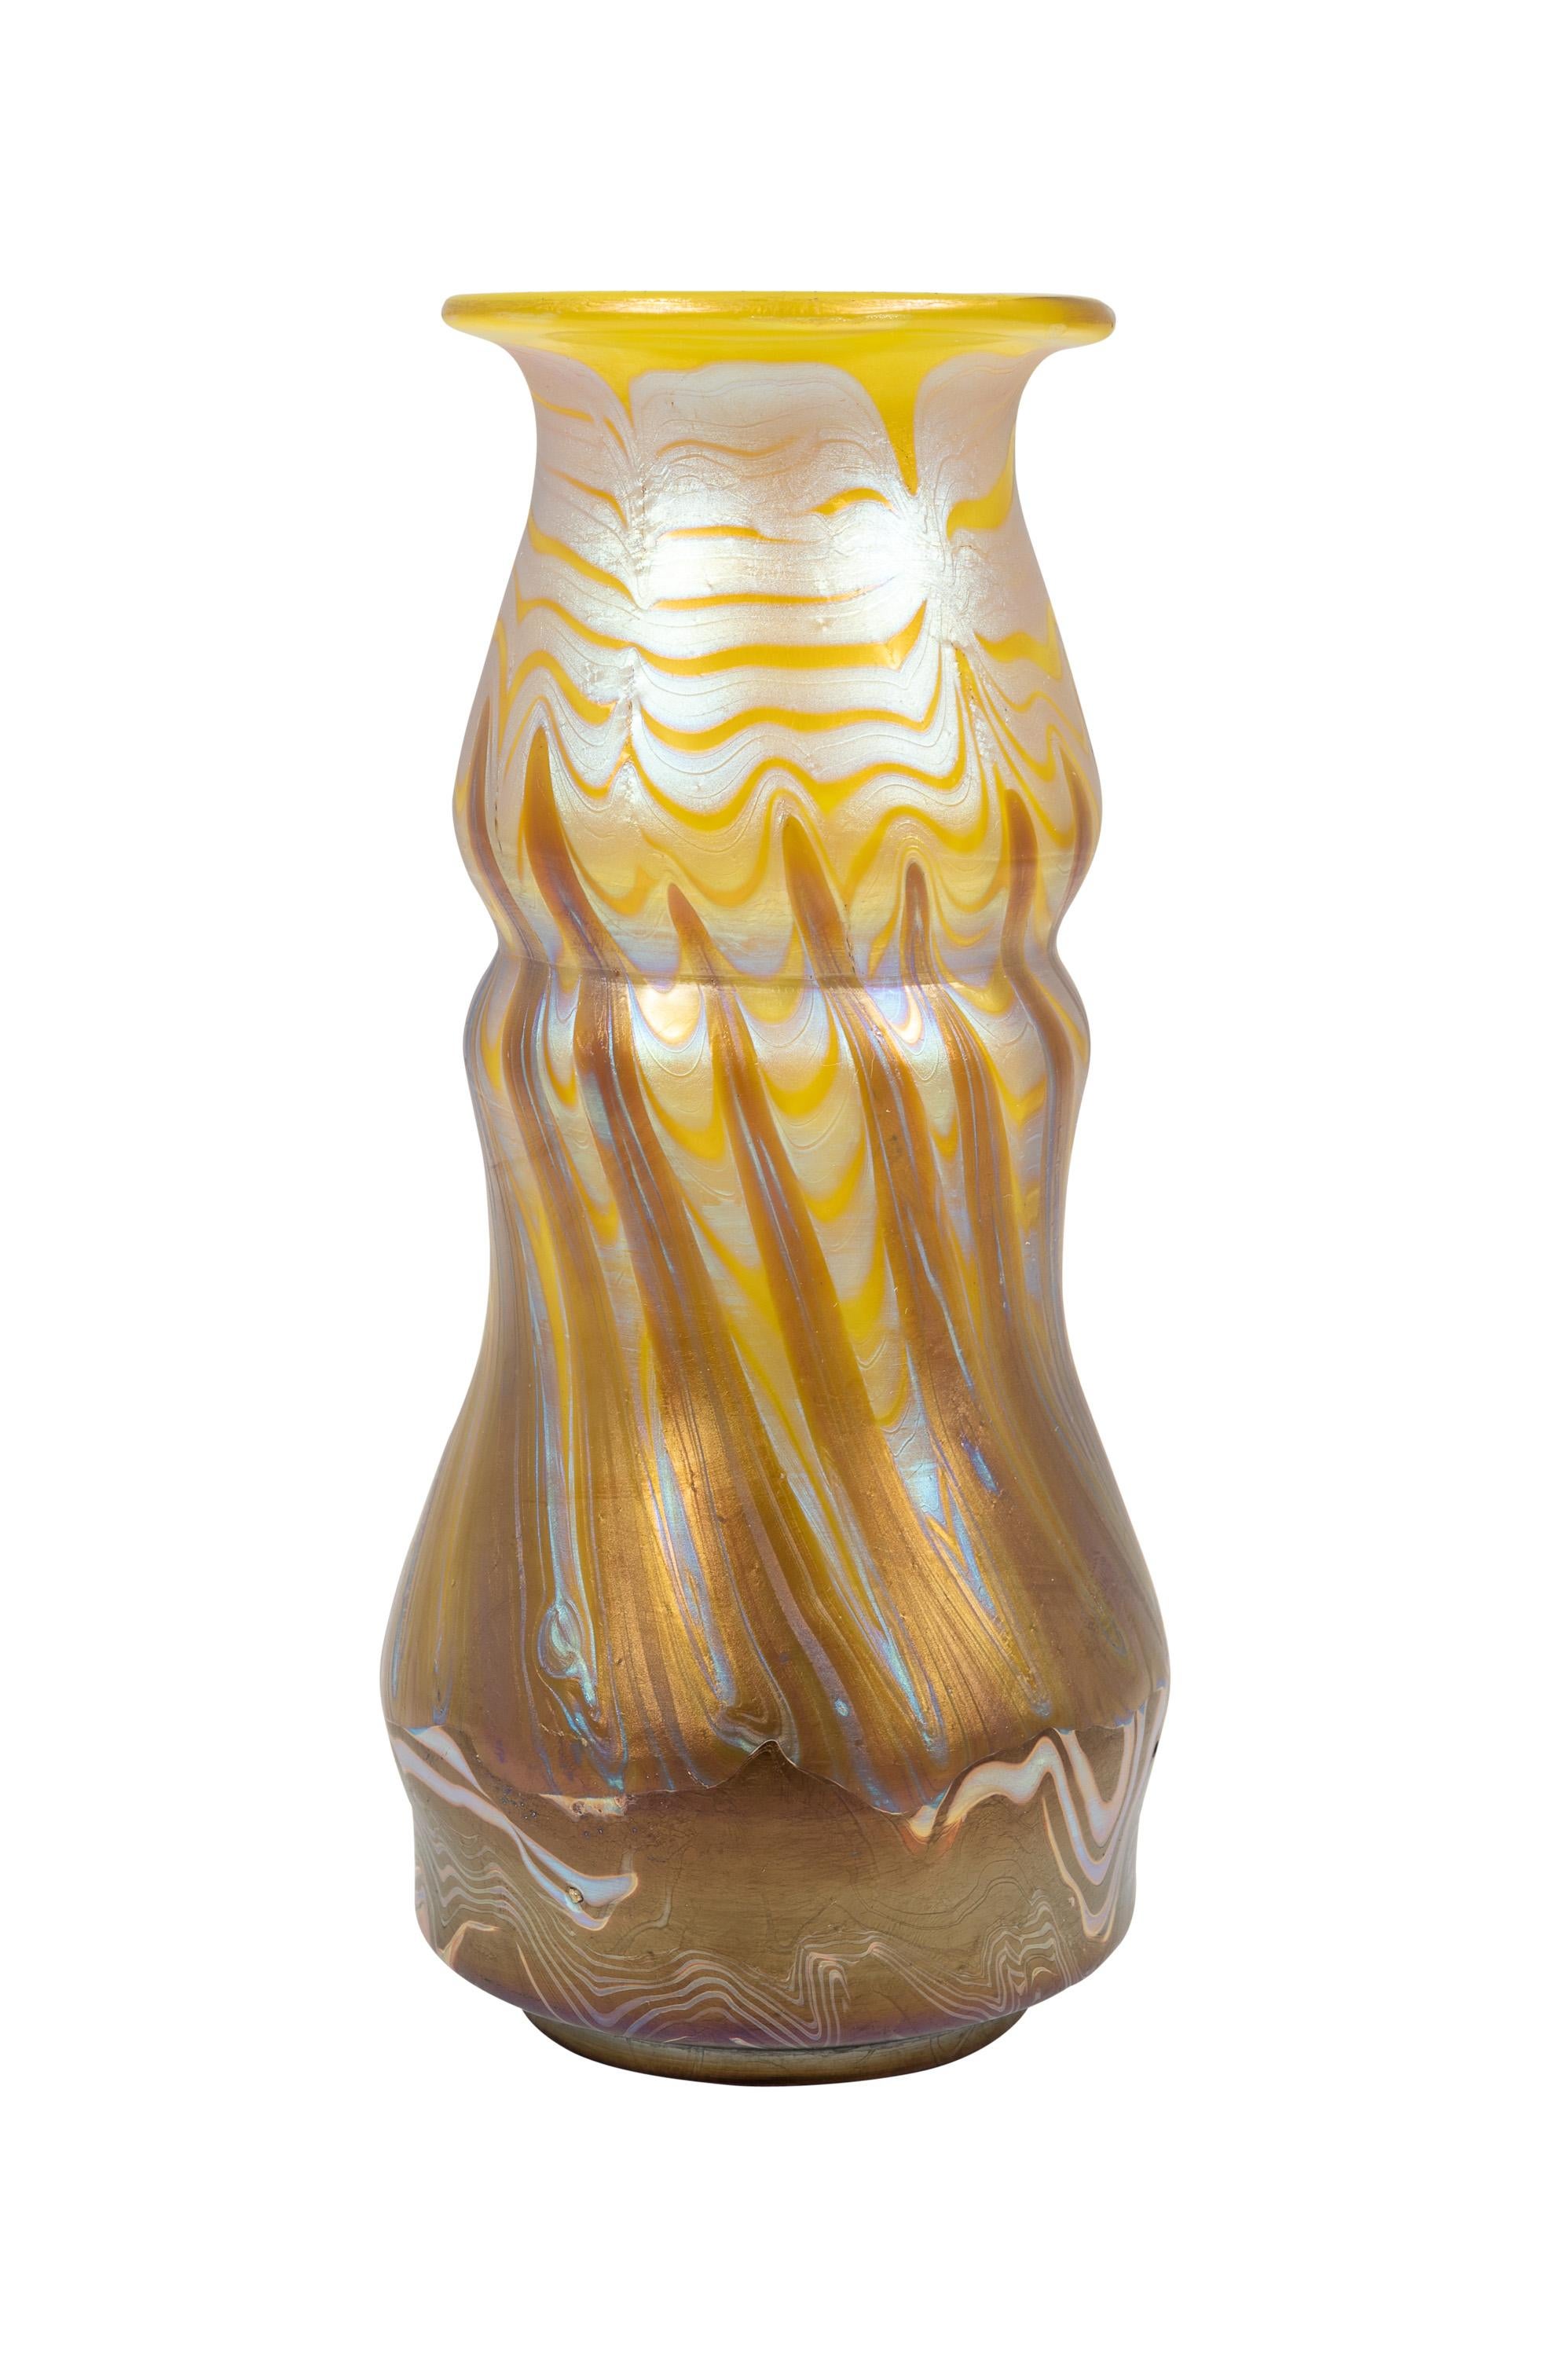 Austrian Signed Glass Vase Loetz Decoration circa 1900 Art Nouveau Jugendstil Bohemia For Sale